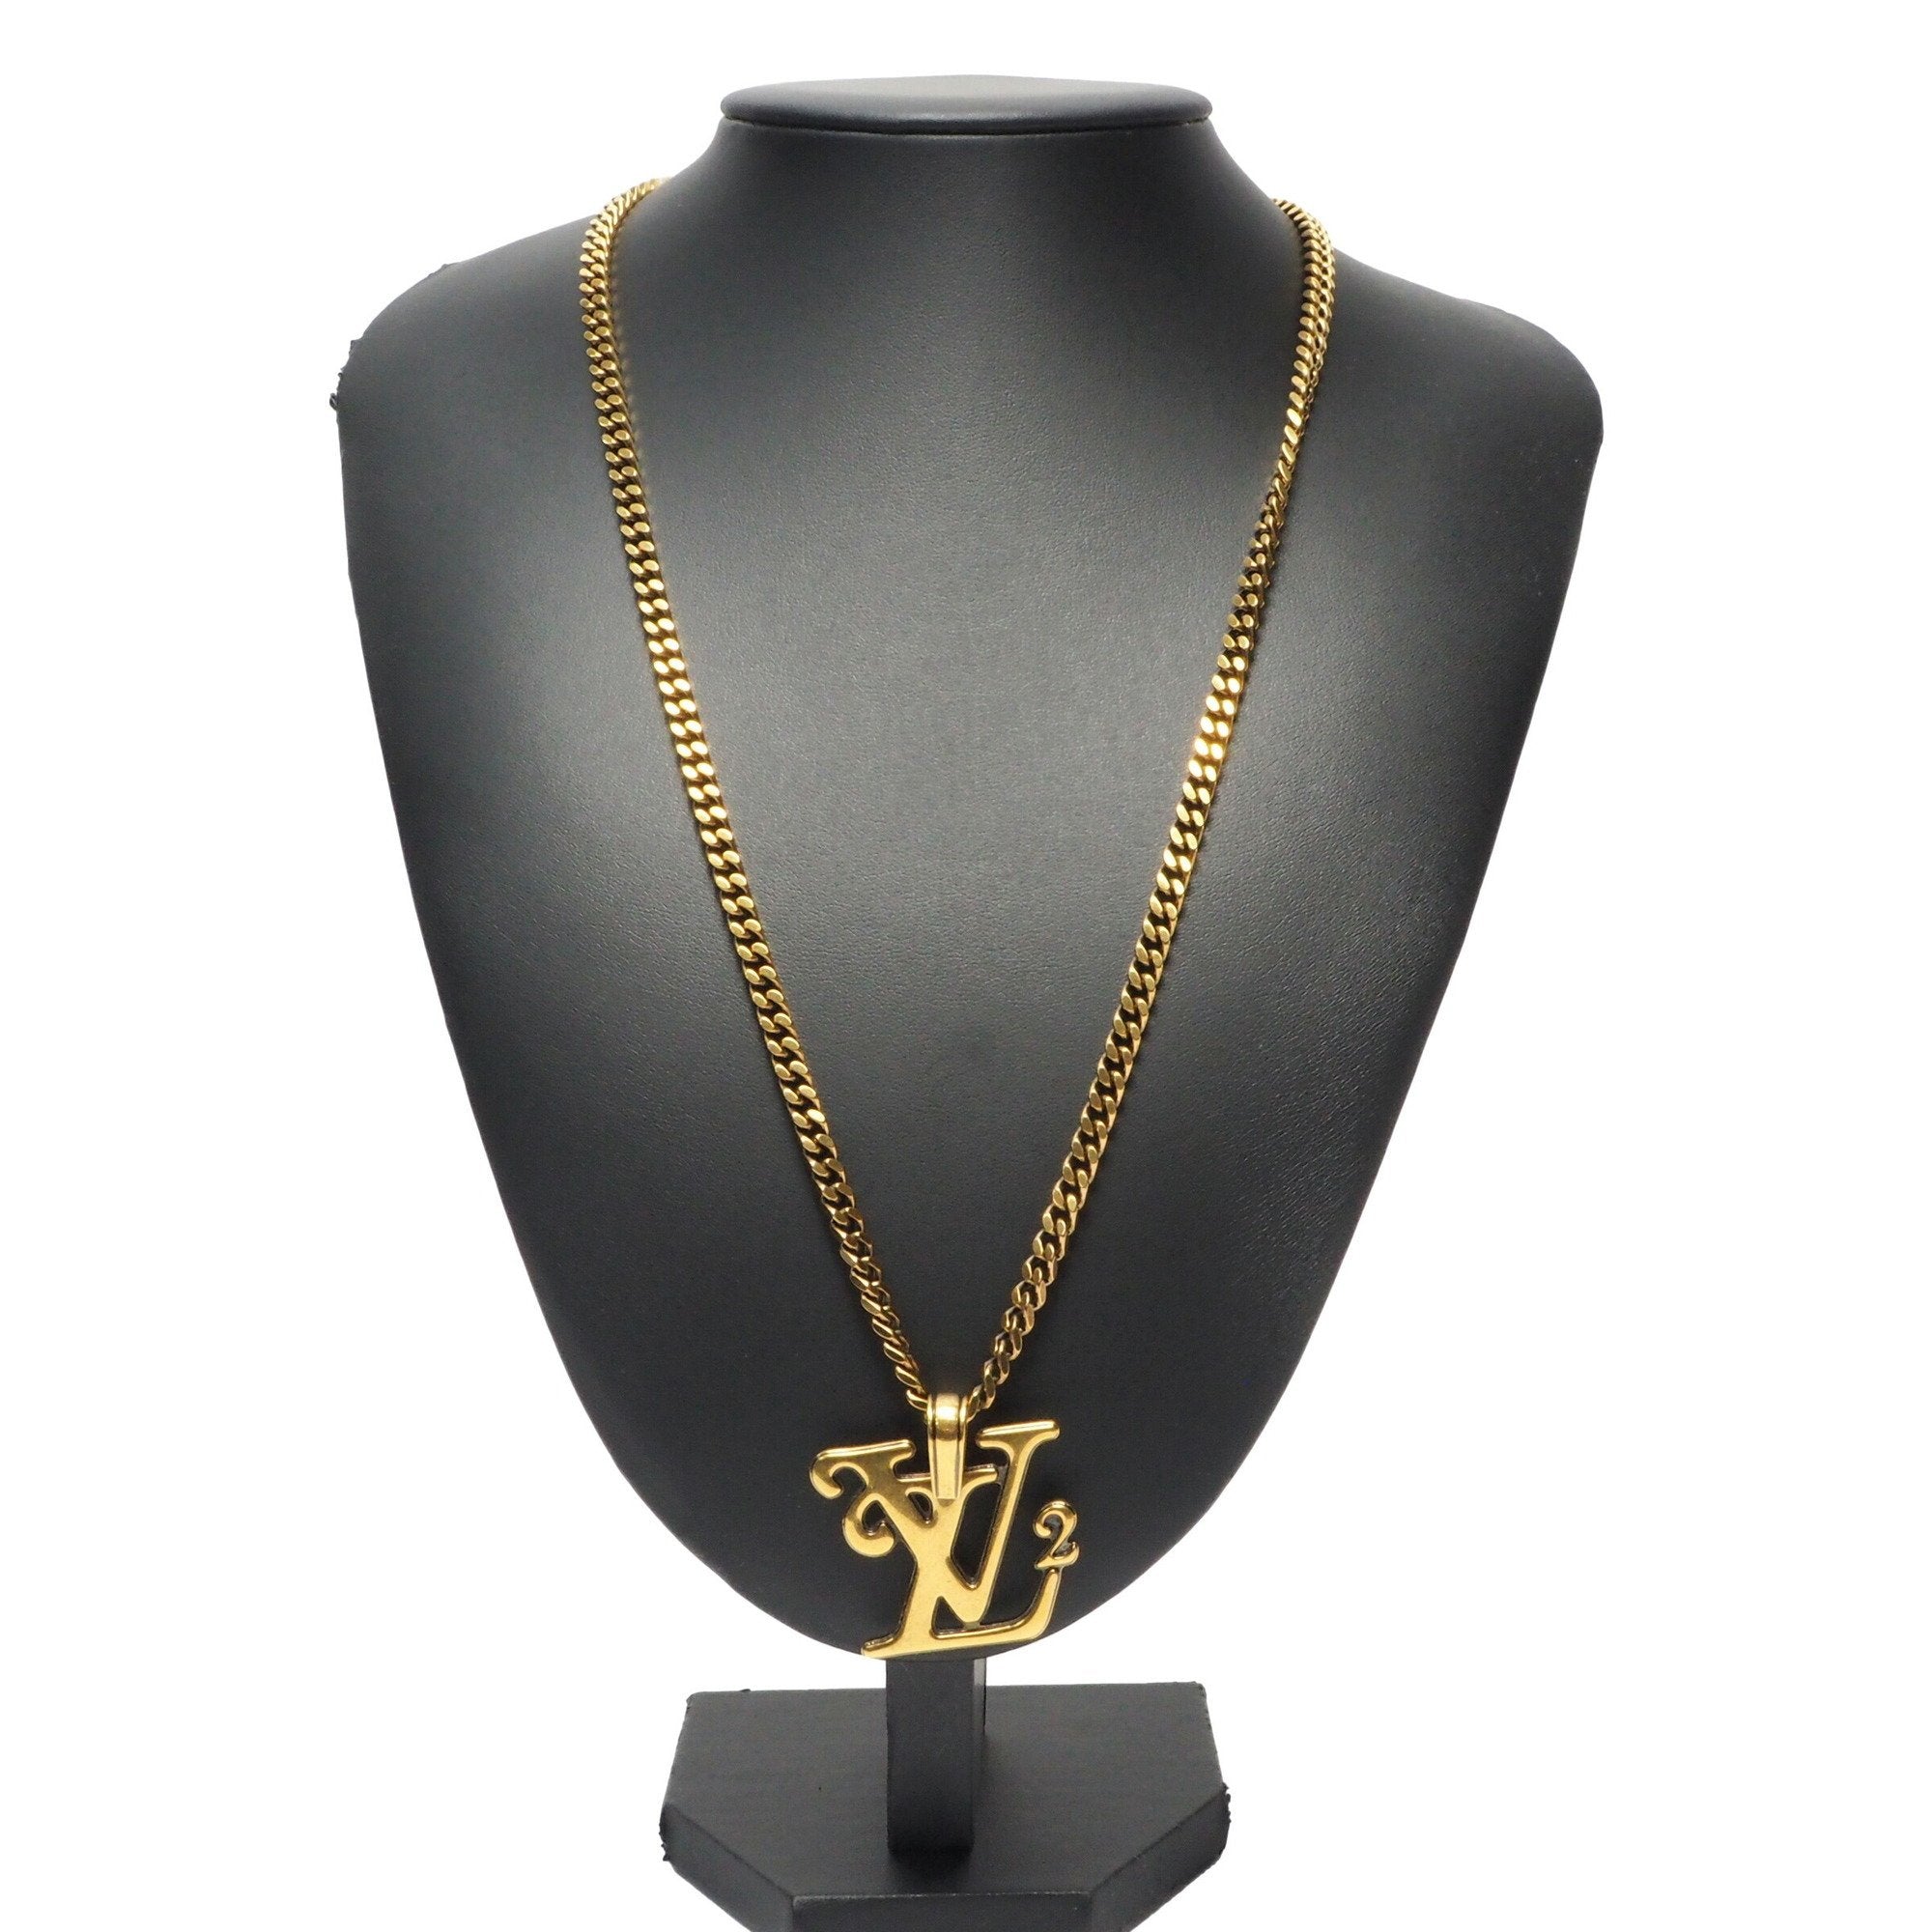 Louis Vuitton NIGO Nigo Collier Squared Necklace Pendant Chain Long Me